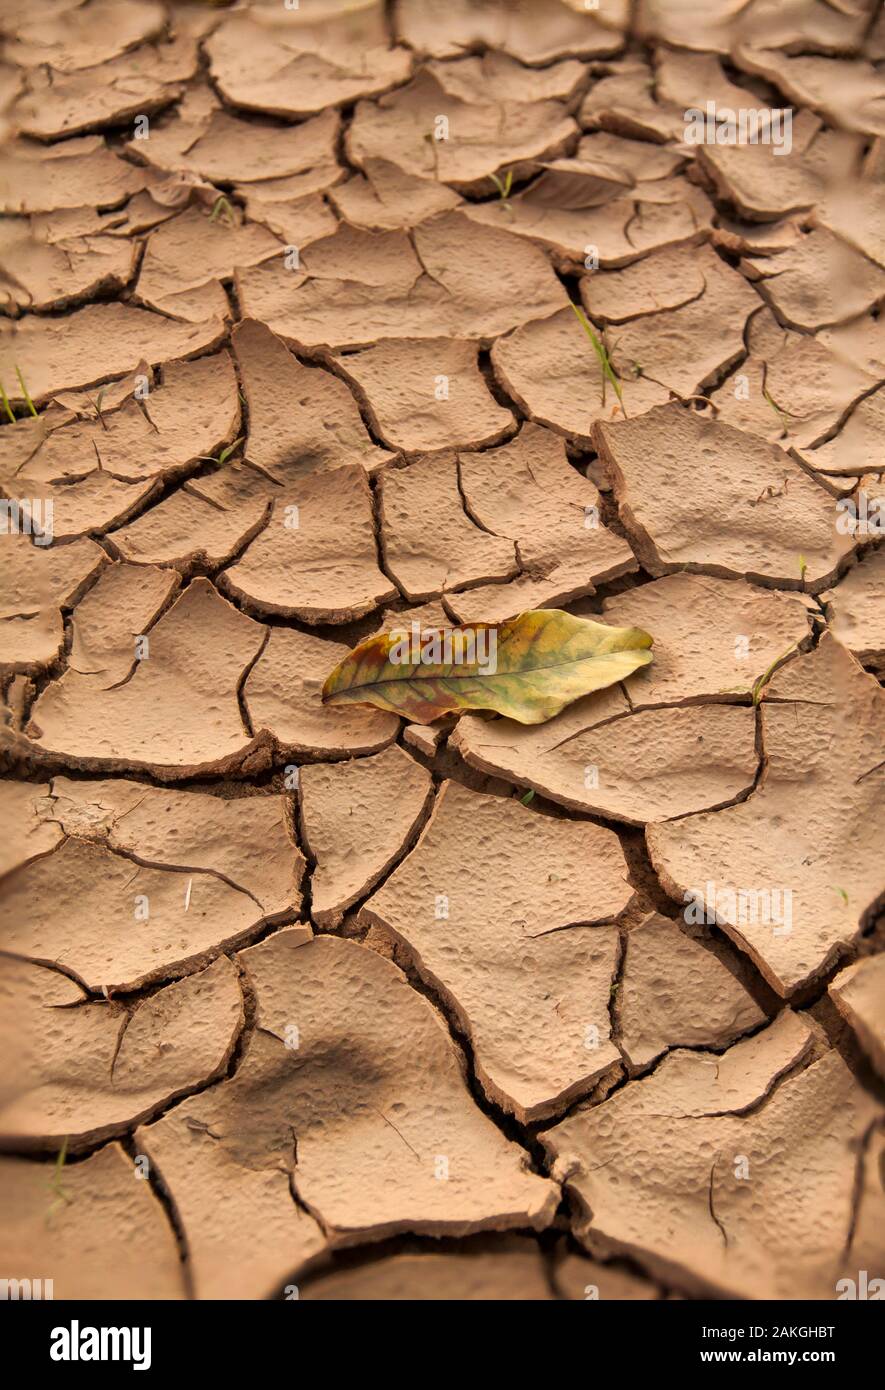 desert dry place ground cracked Stock Photo